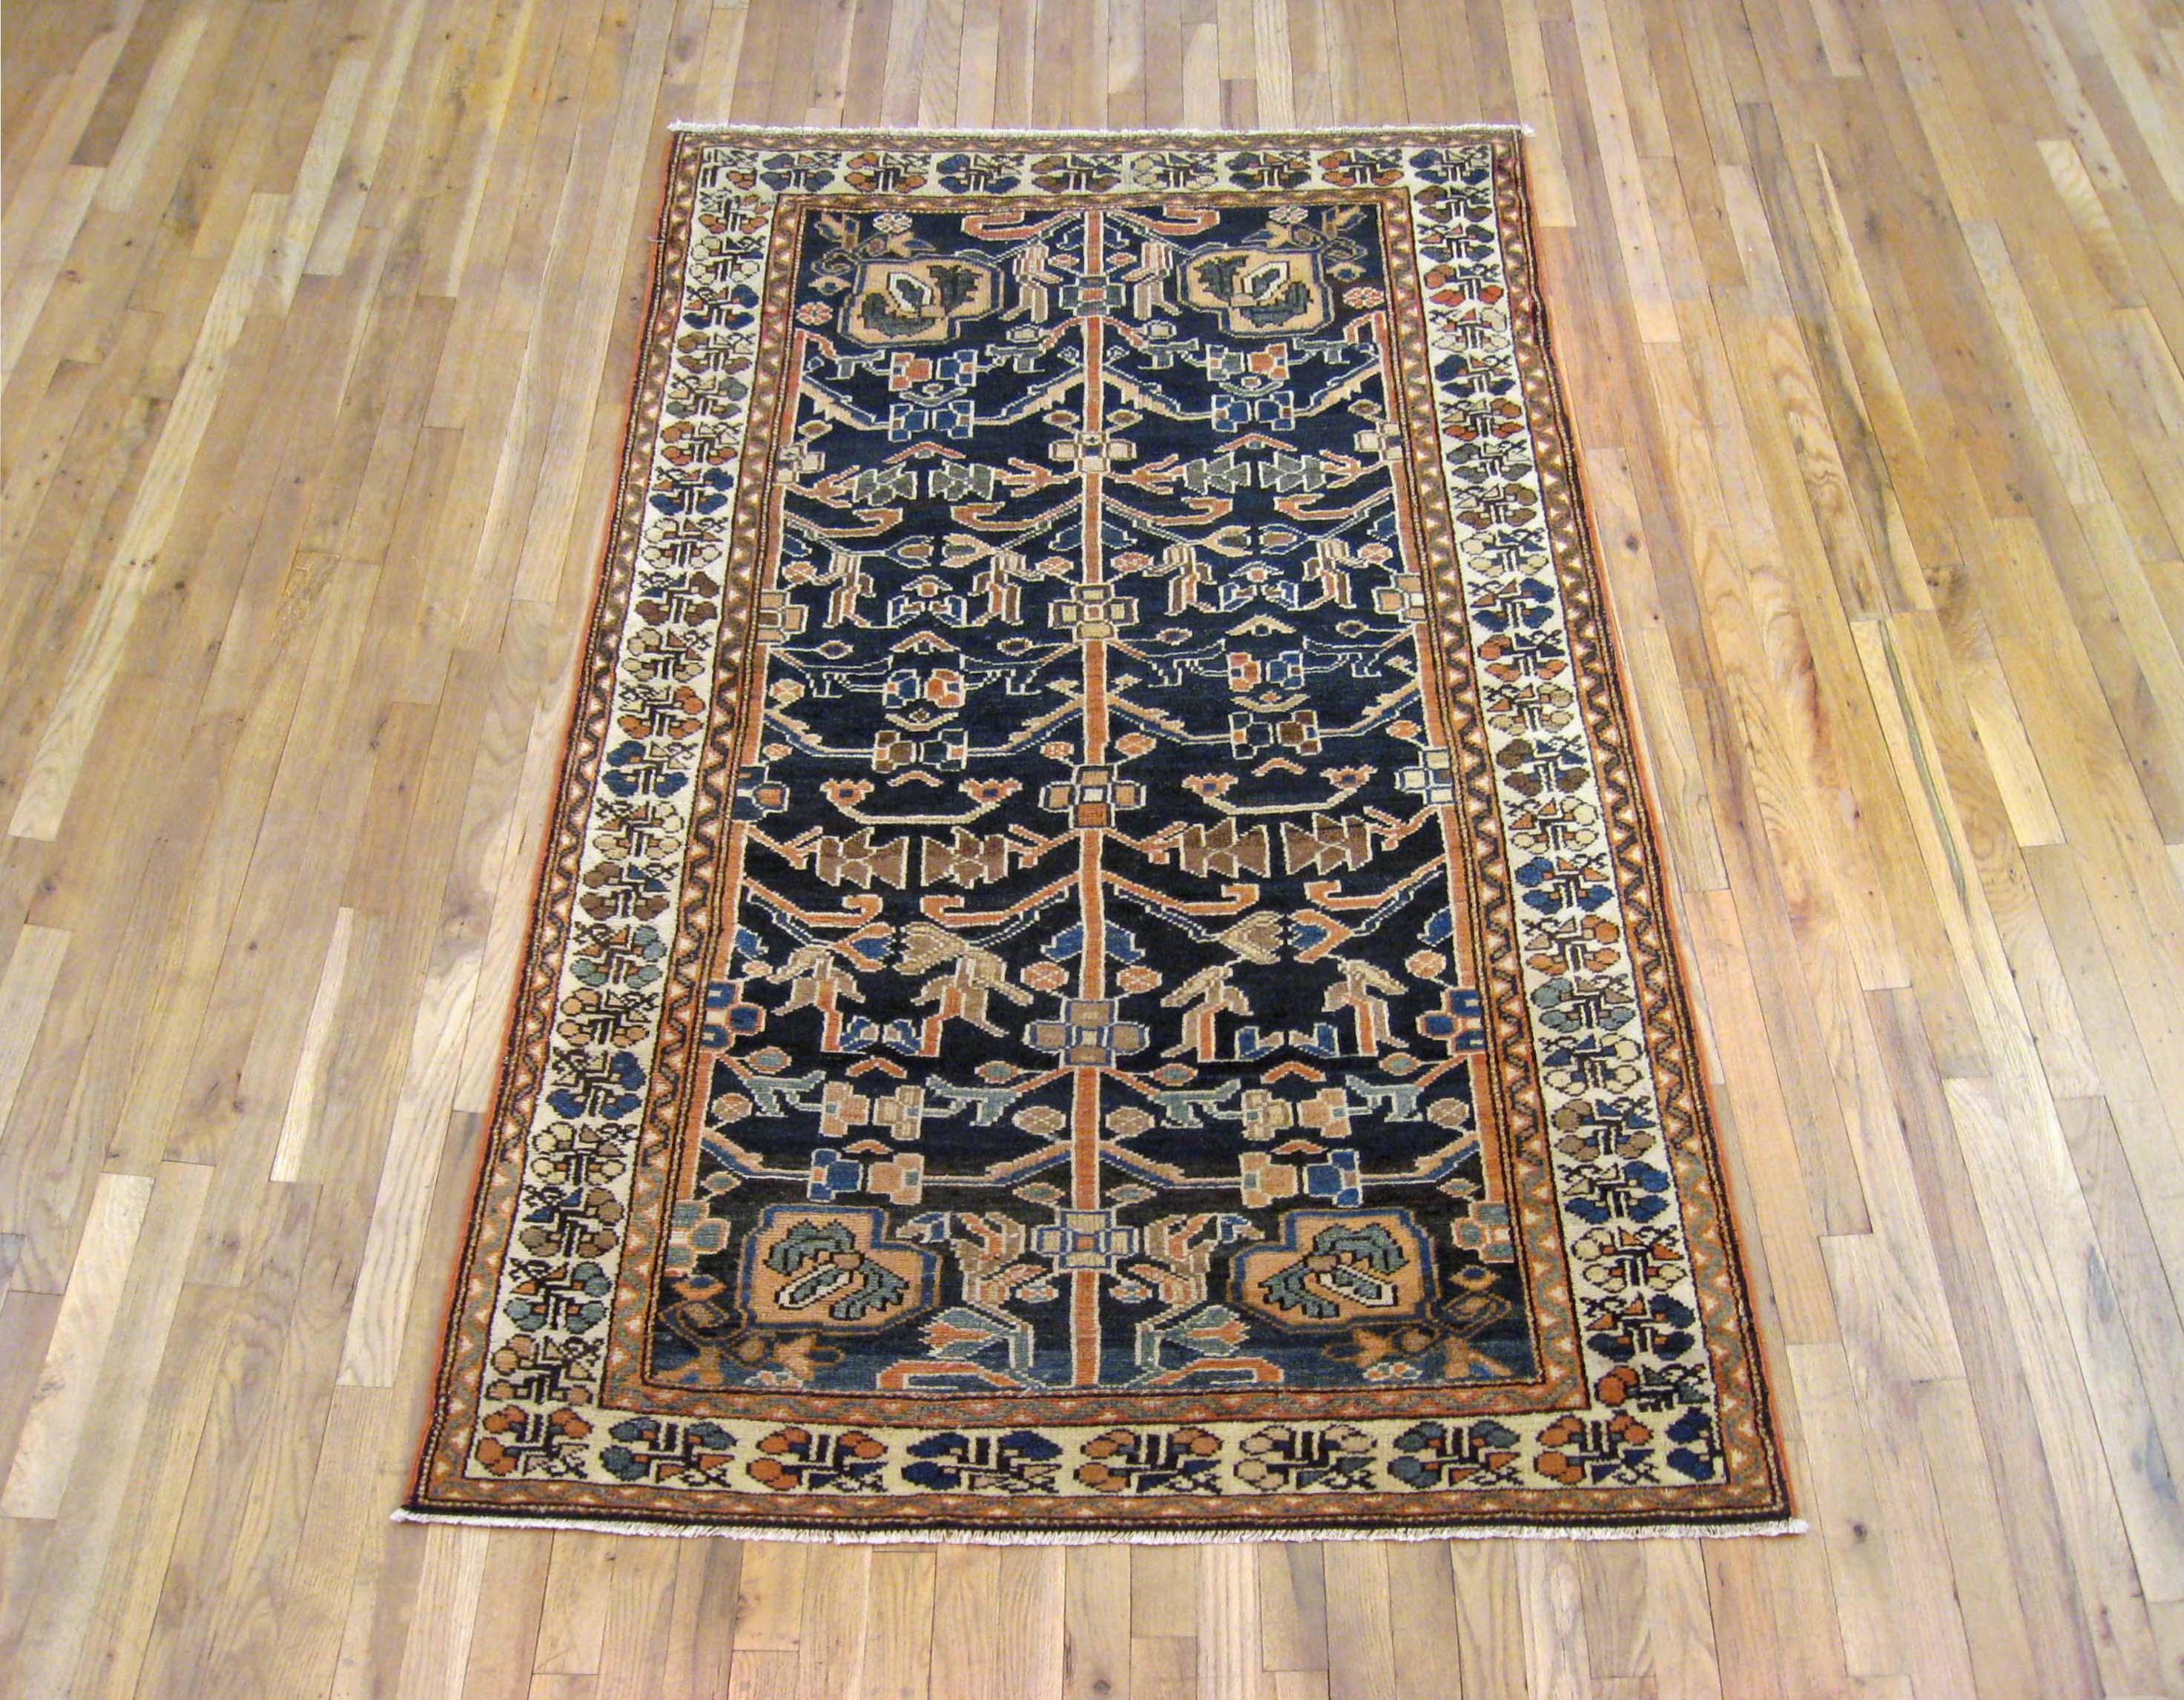 Antique Persian Baktiari Oriental Rug, Small size

An antique Baktiari oriental rug, size 6'9